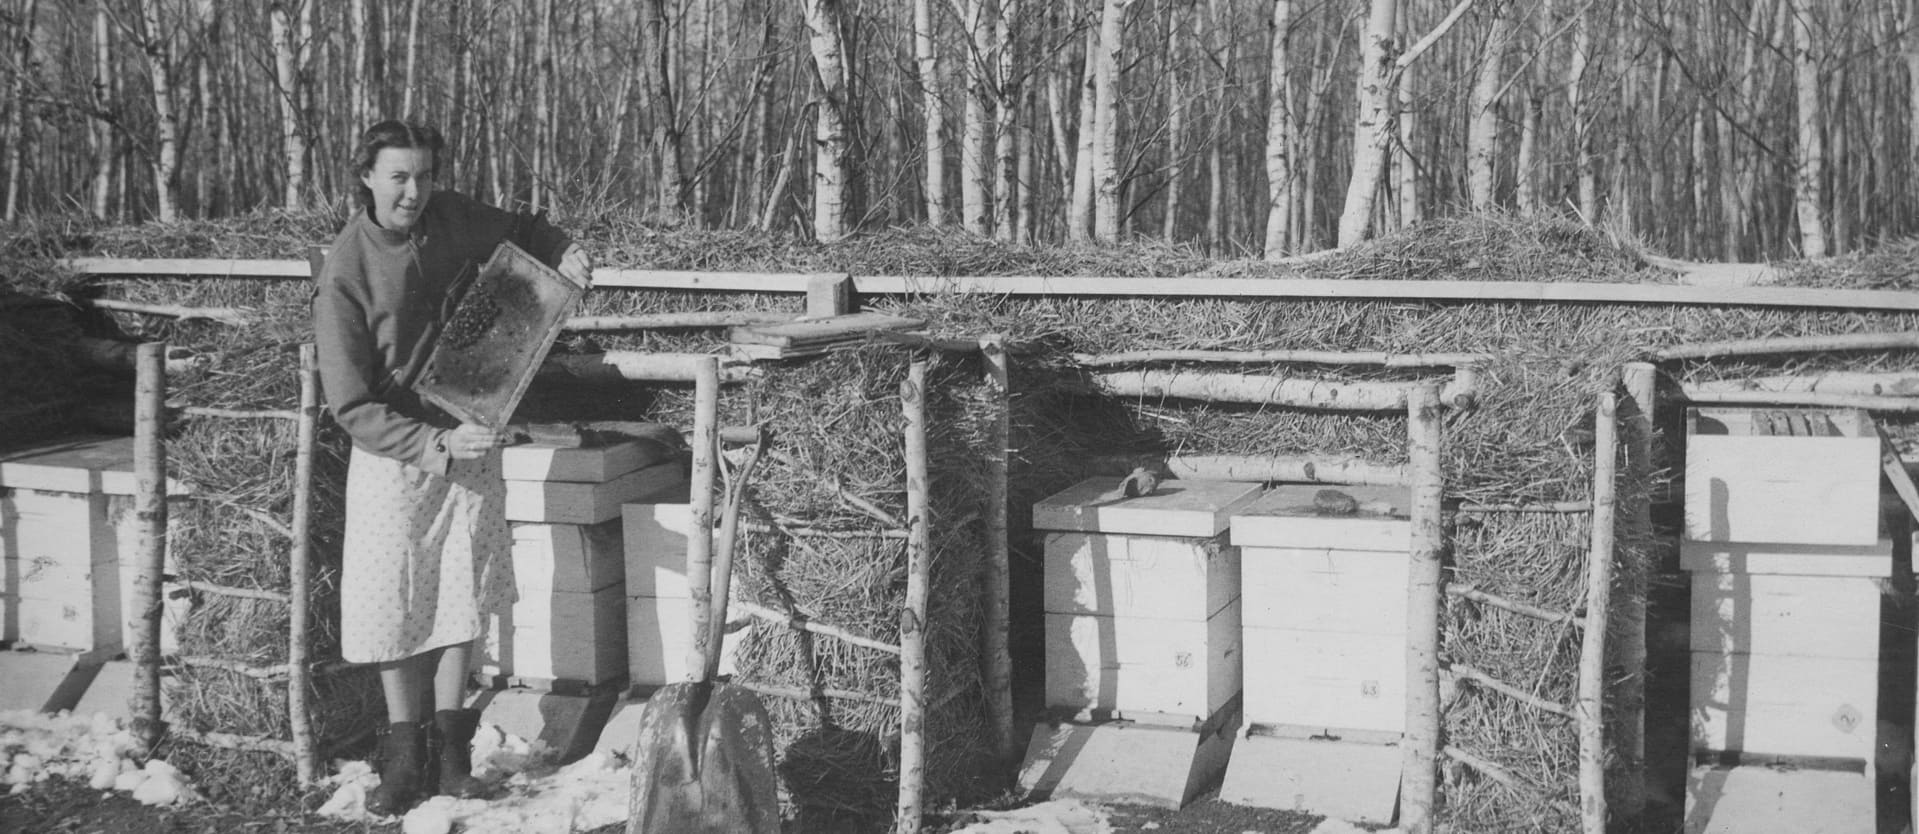 Alvera Wendell checking beehives in spring circa 1940.